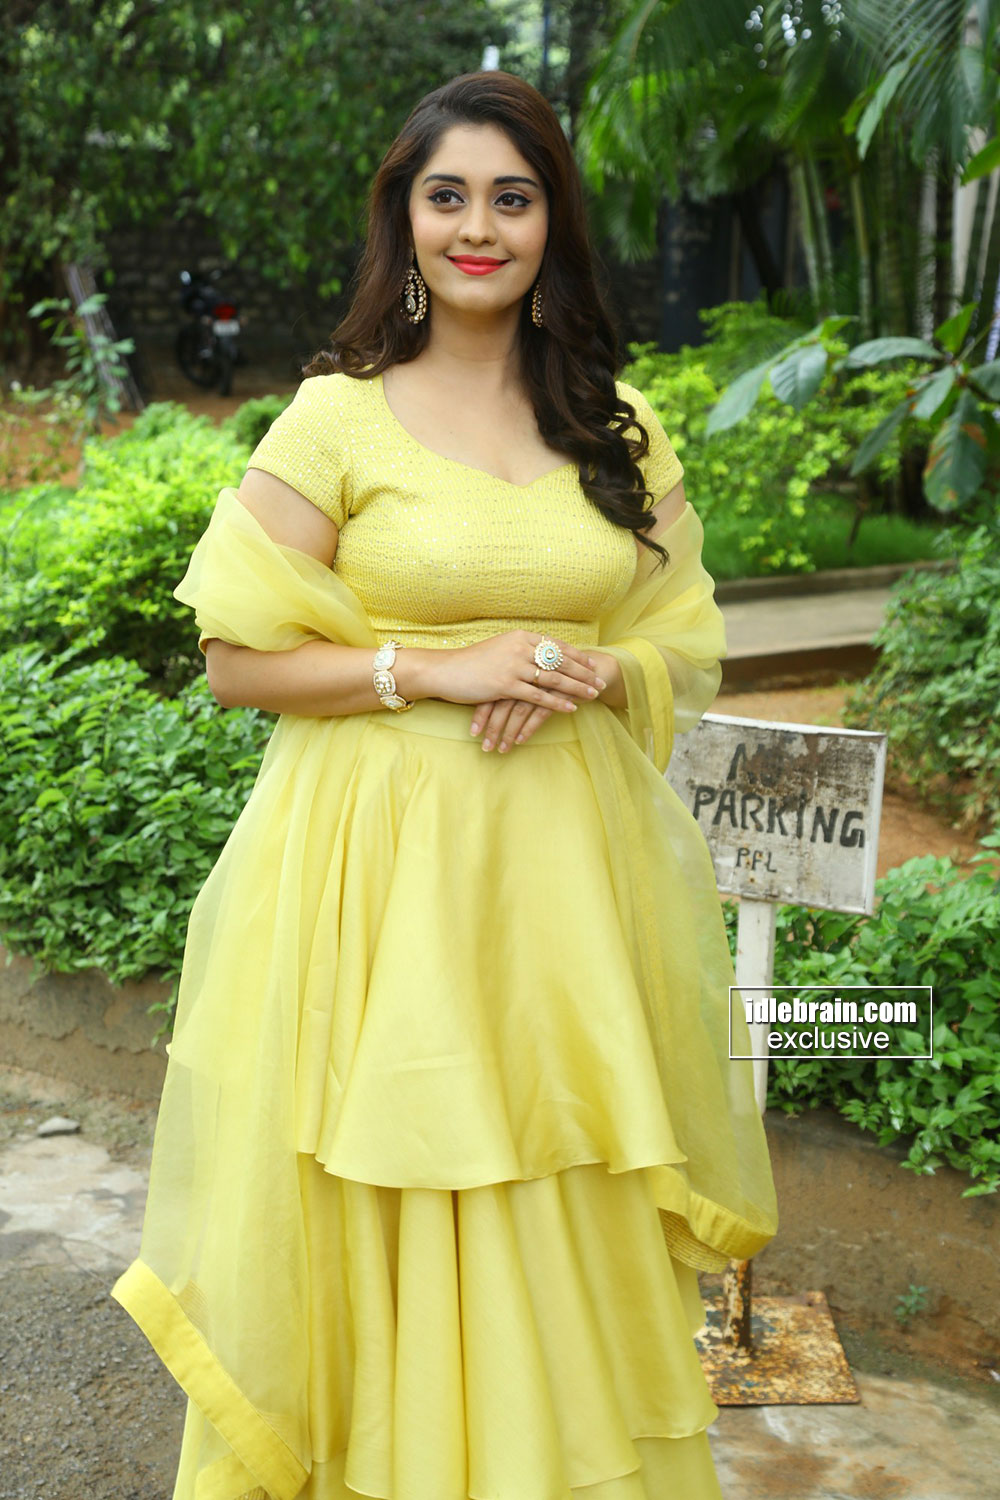 Surabhi photo gallery - Telugu cinema actress